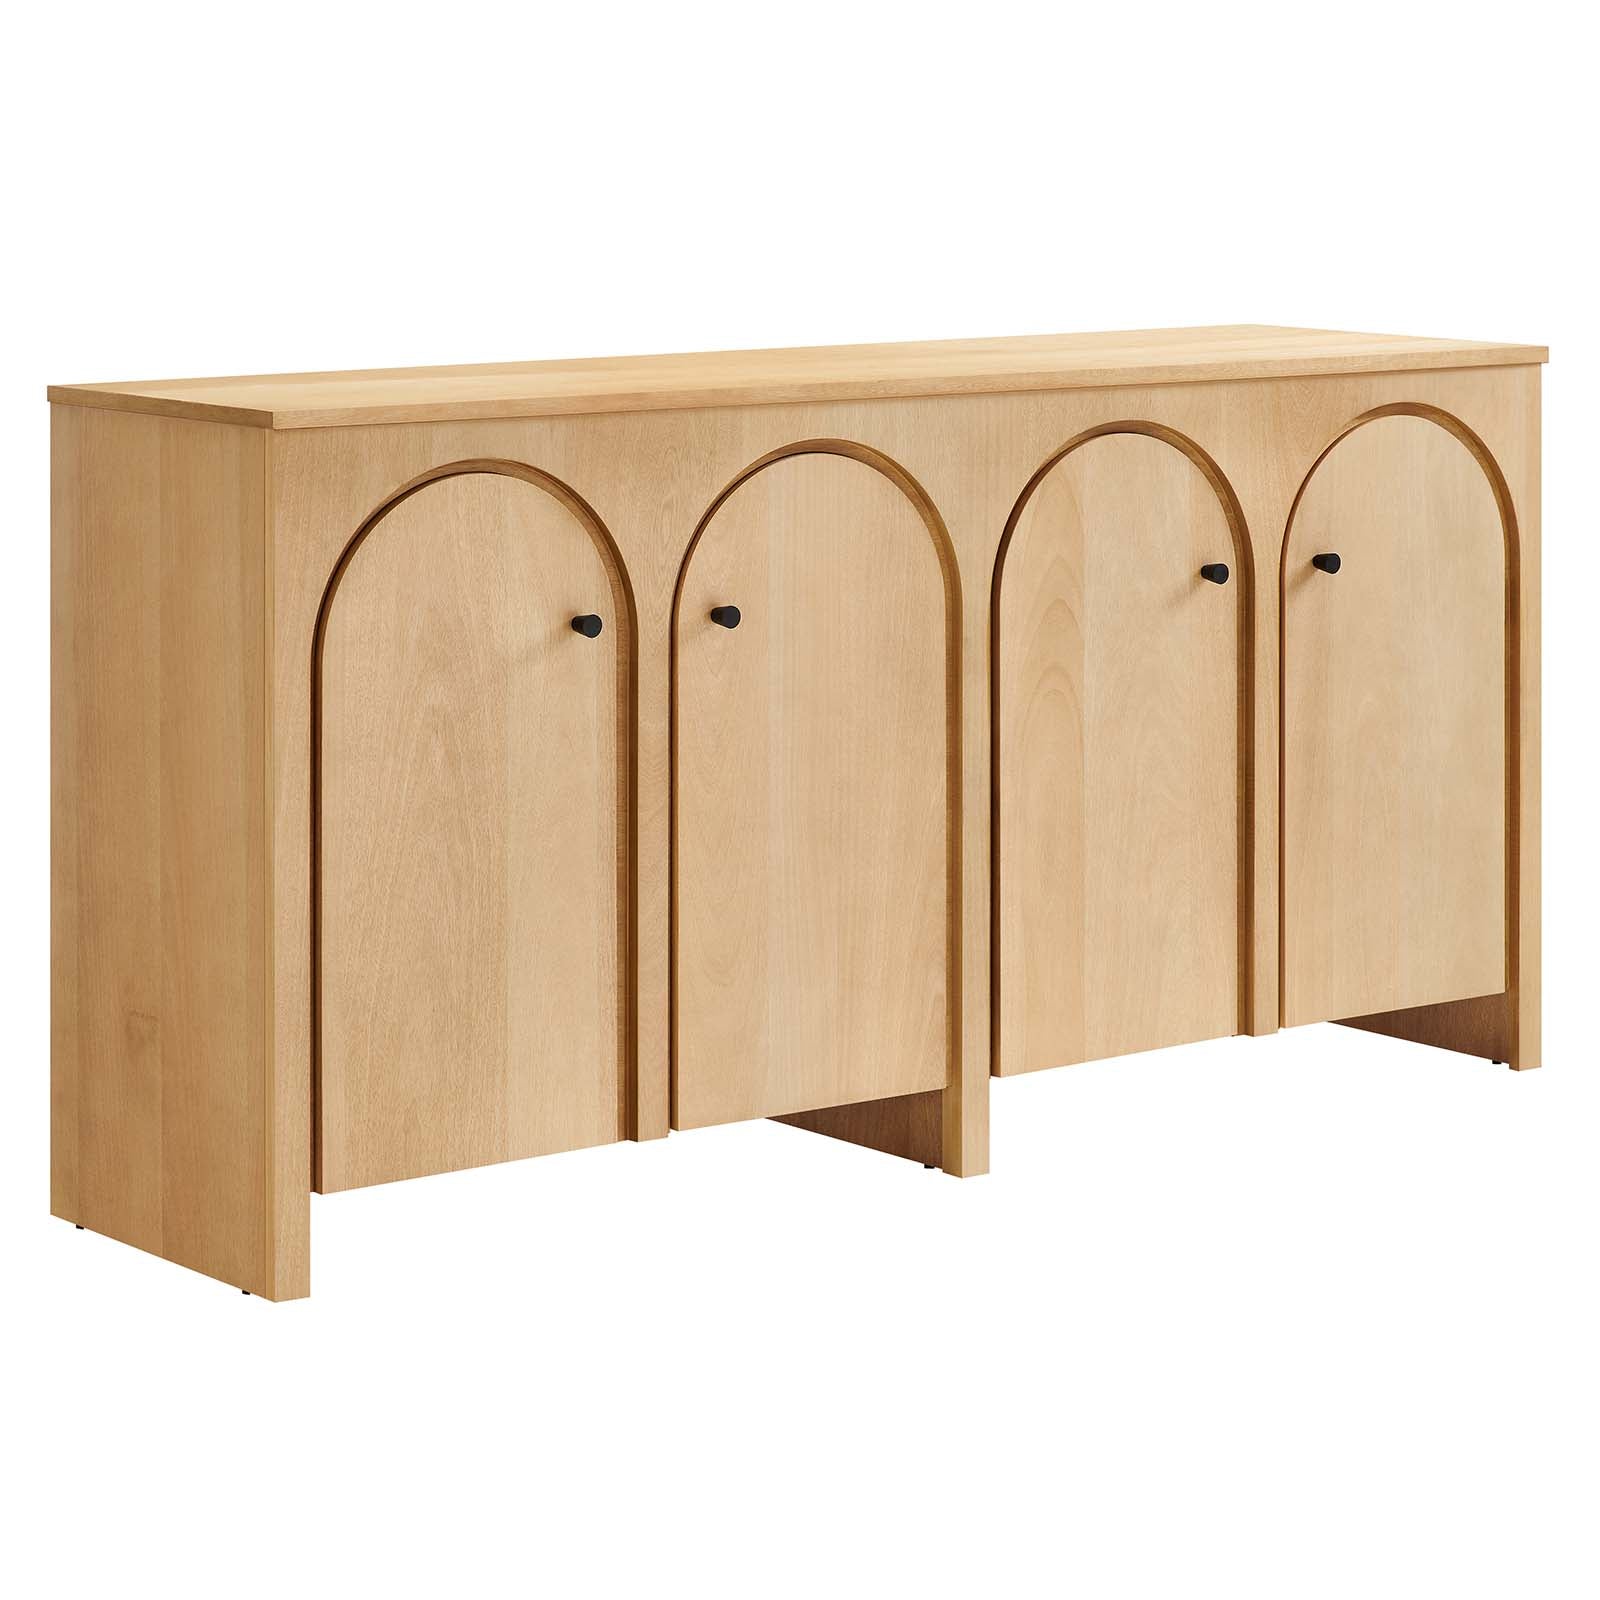 Appia Wood Grain 4-Door Sideboard Storage Cabinet - East Shore Modern Home Furnishings